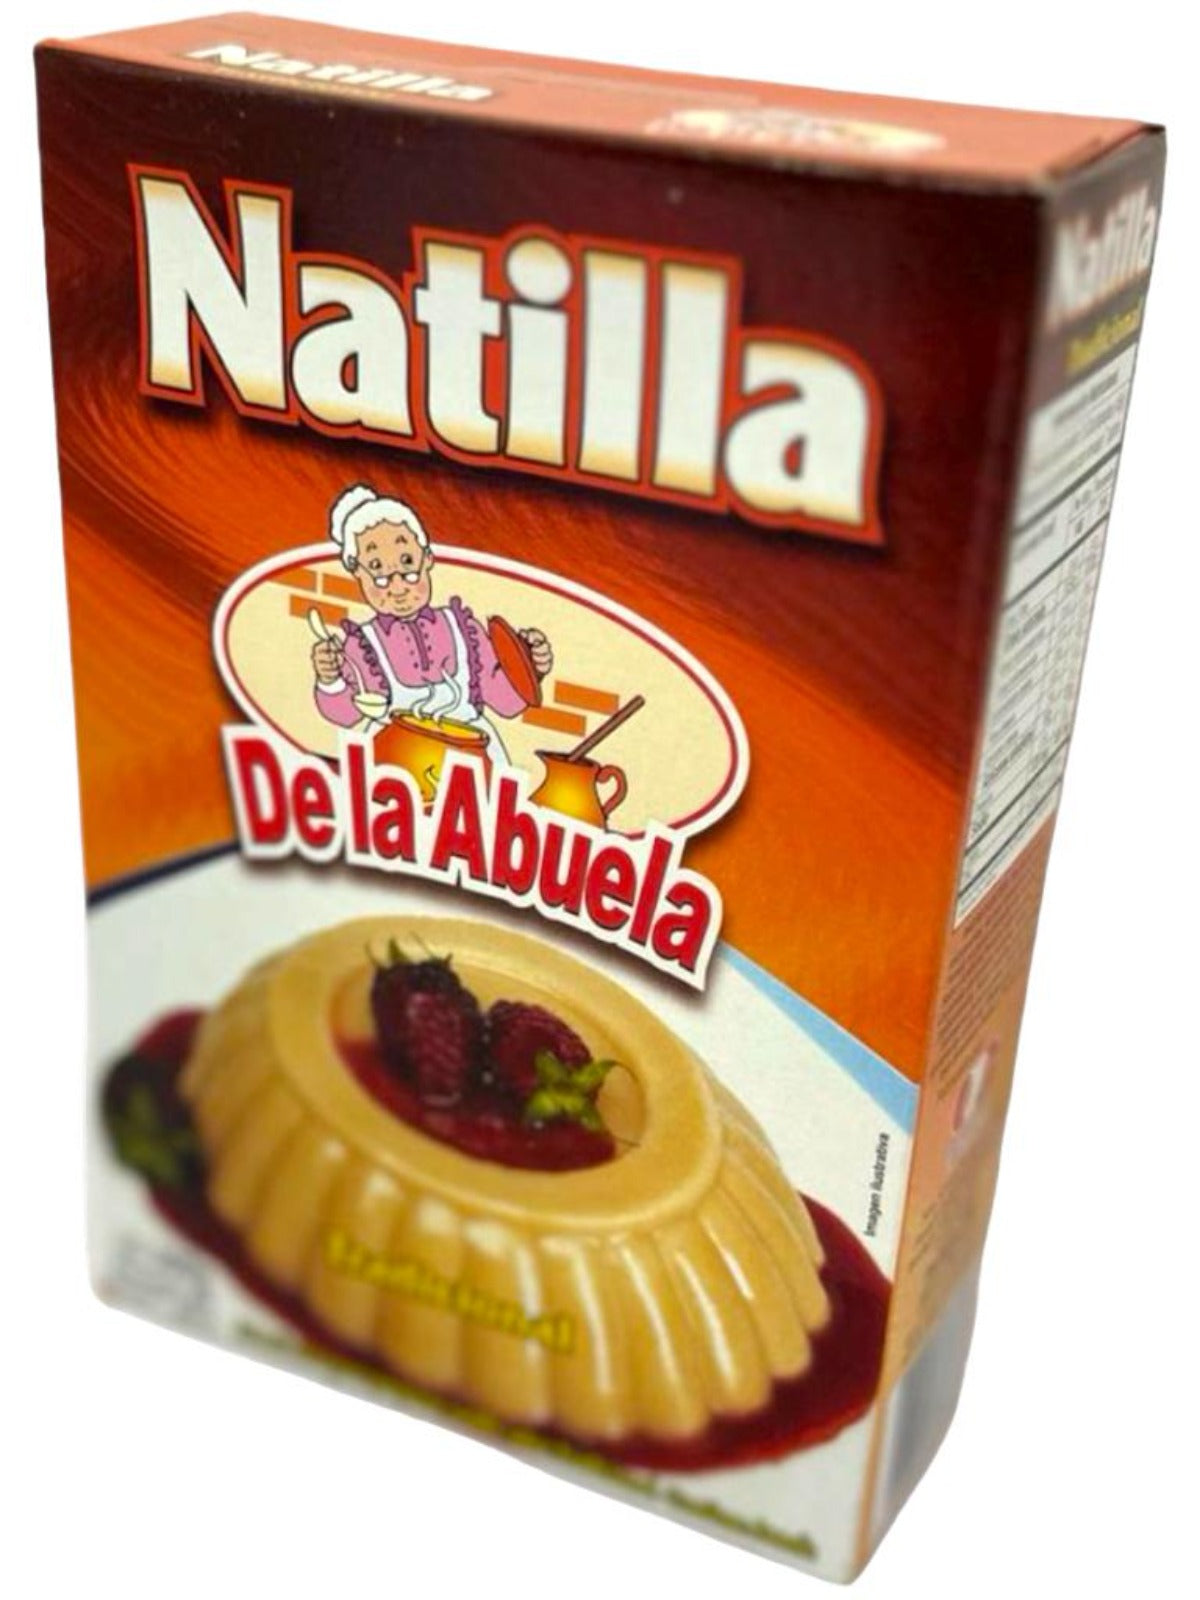 De la Abuela Colombian Natilla 300g ea 4 Pack 1200g Total Use By August 2025